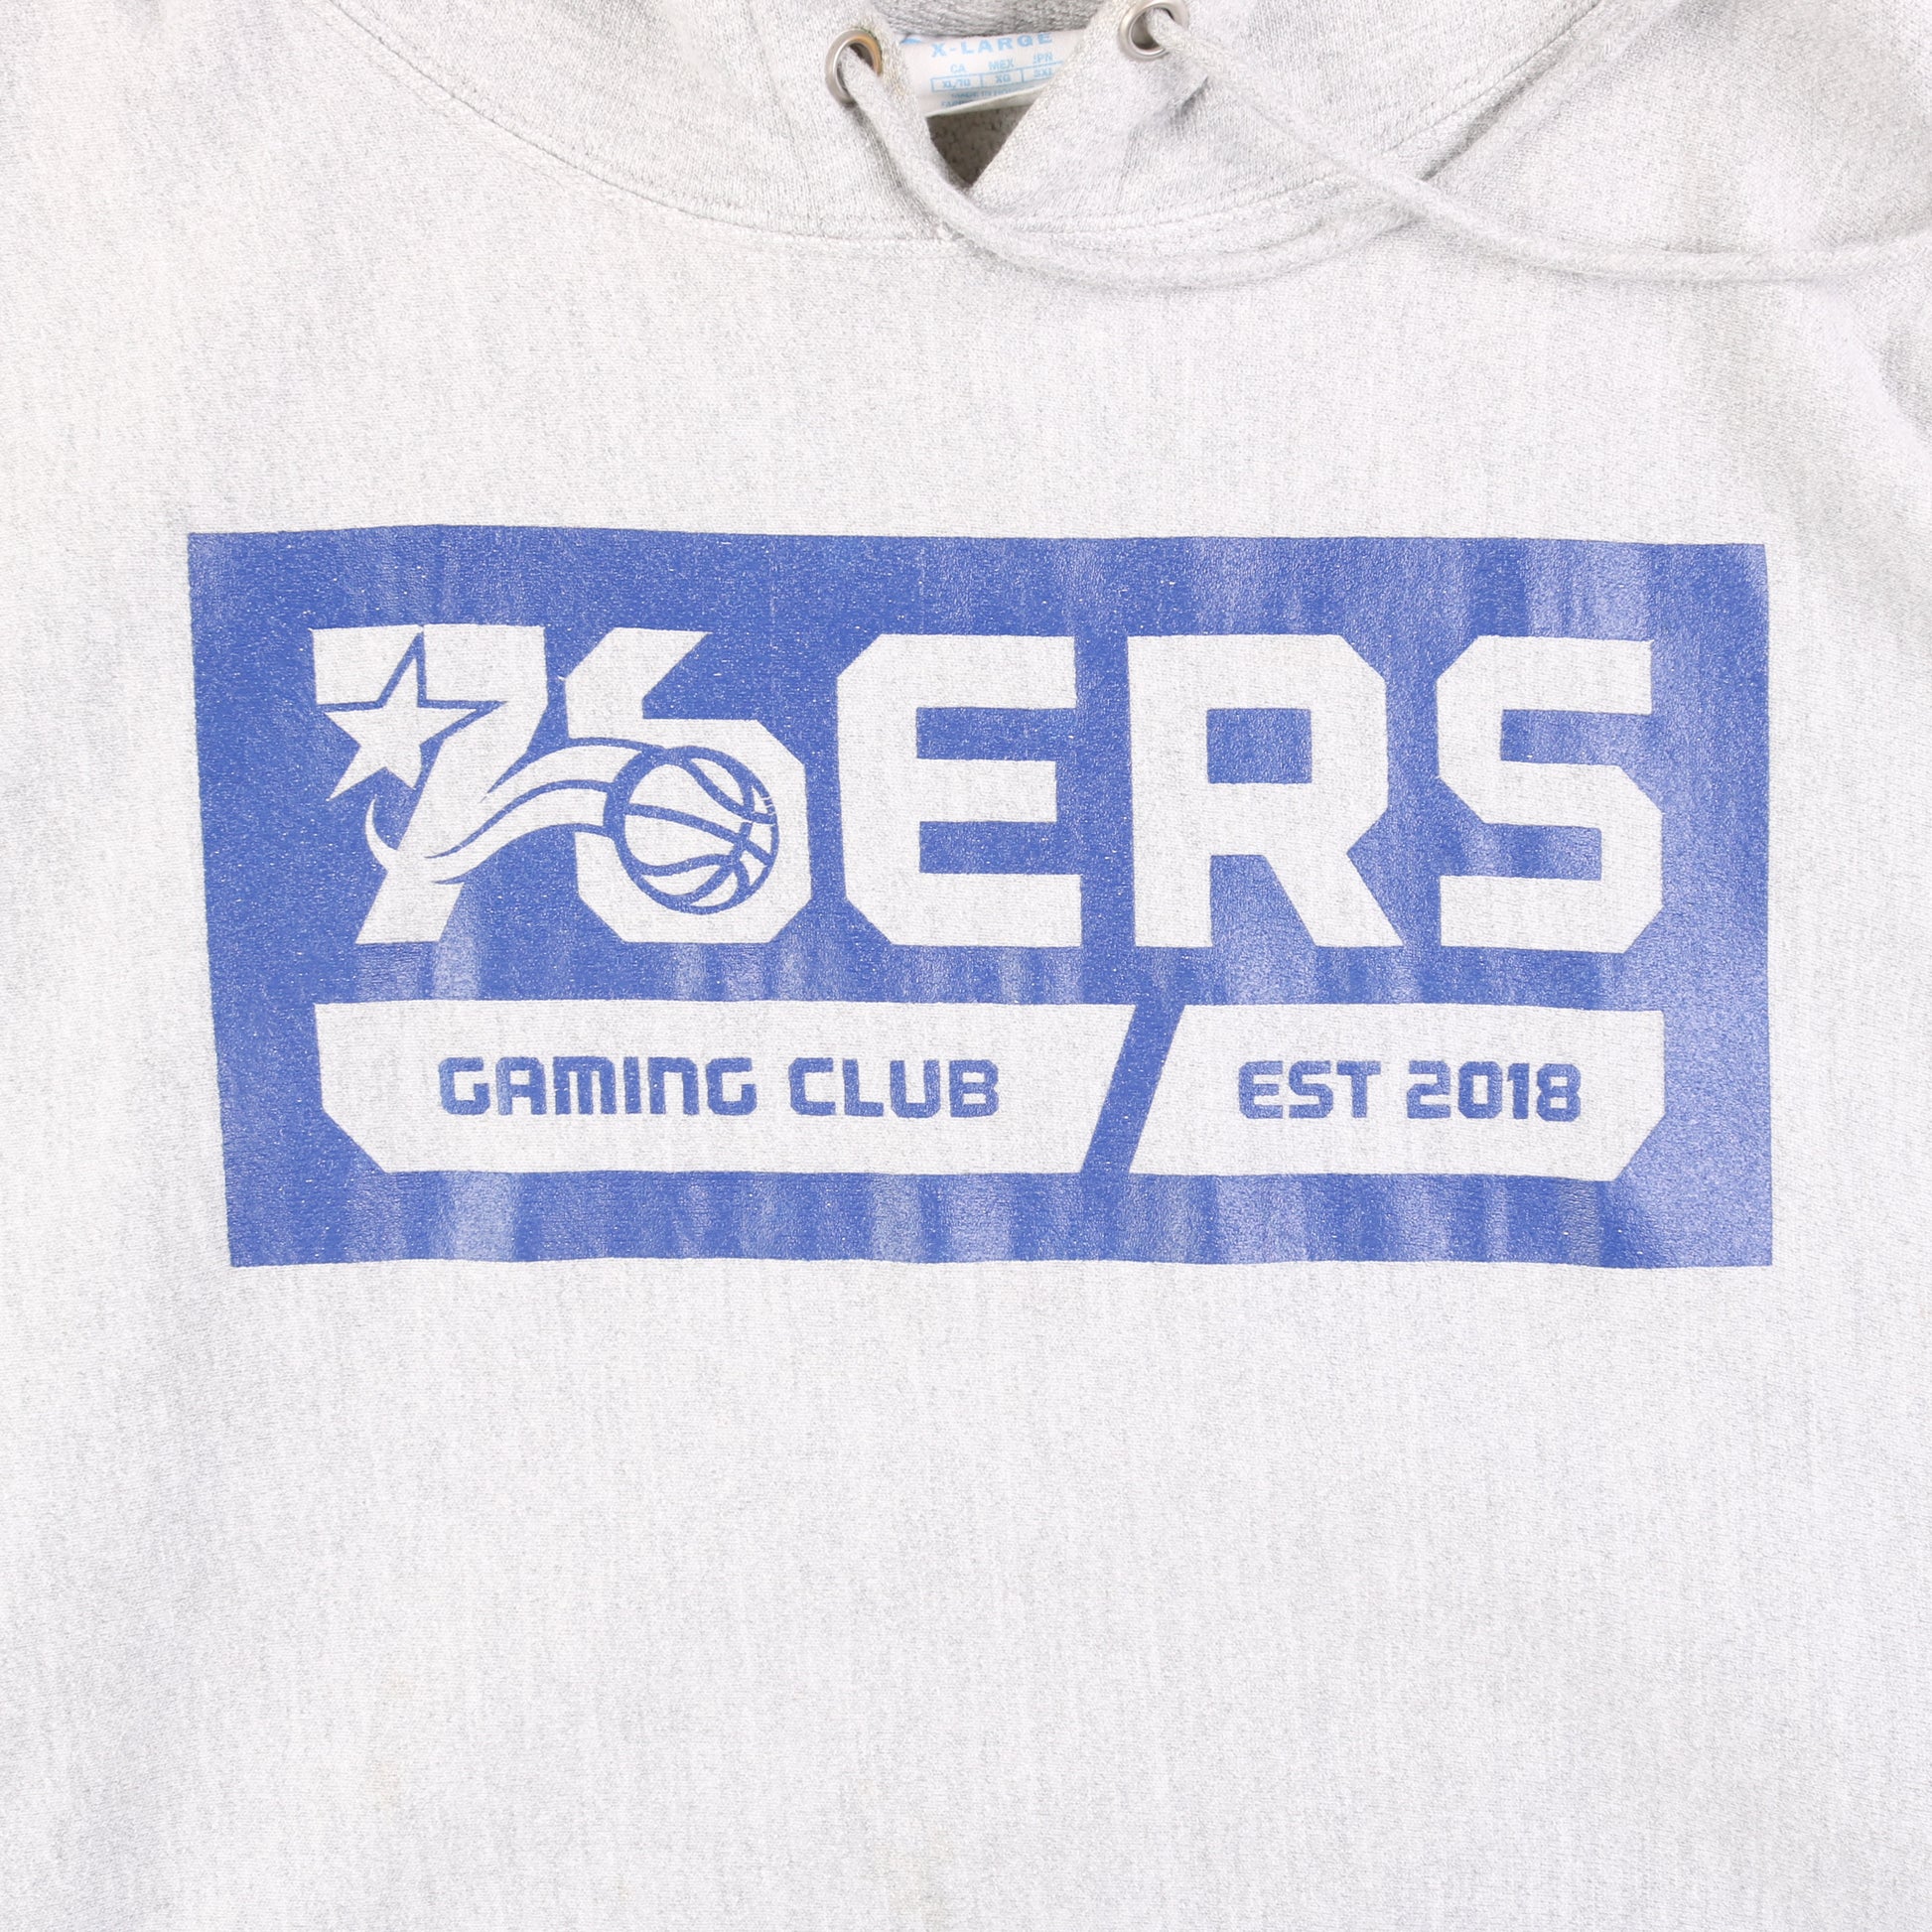 Vintage '76ers Gaming Club' Champion Hooded Sweatshirt - American Madness